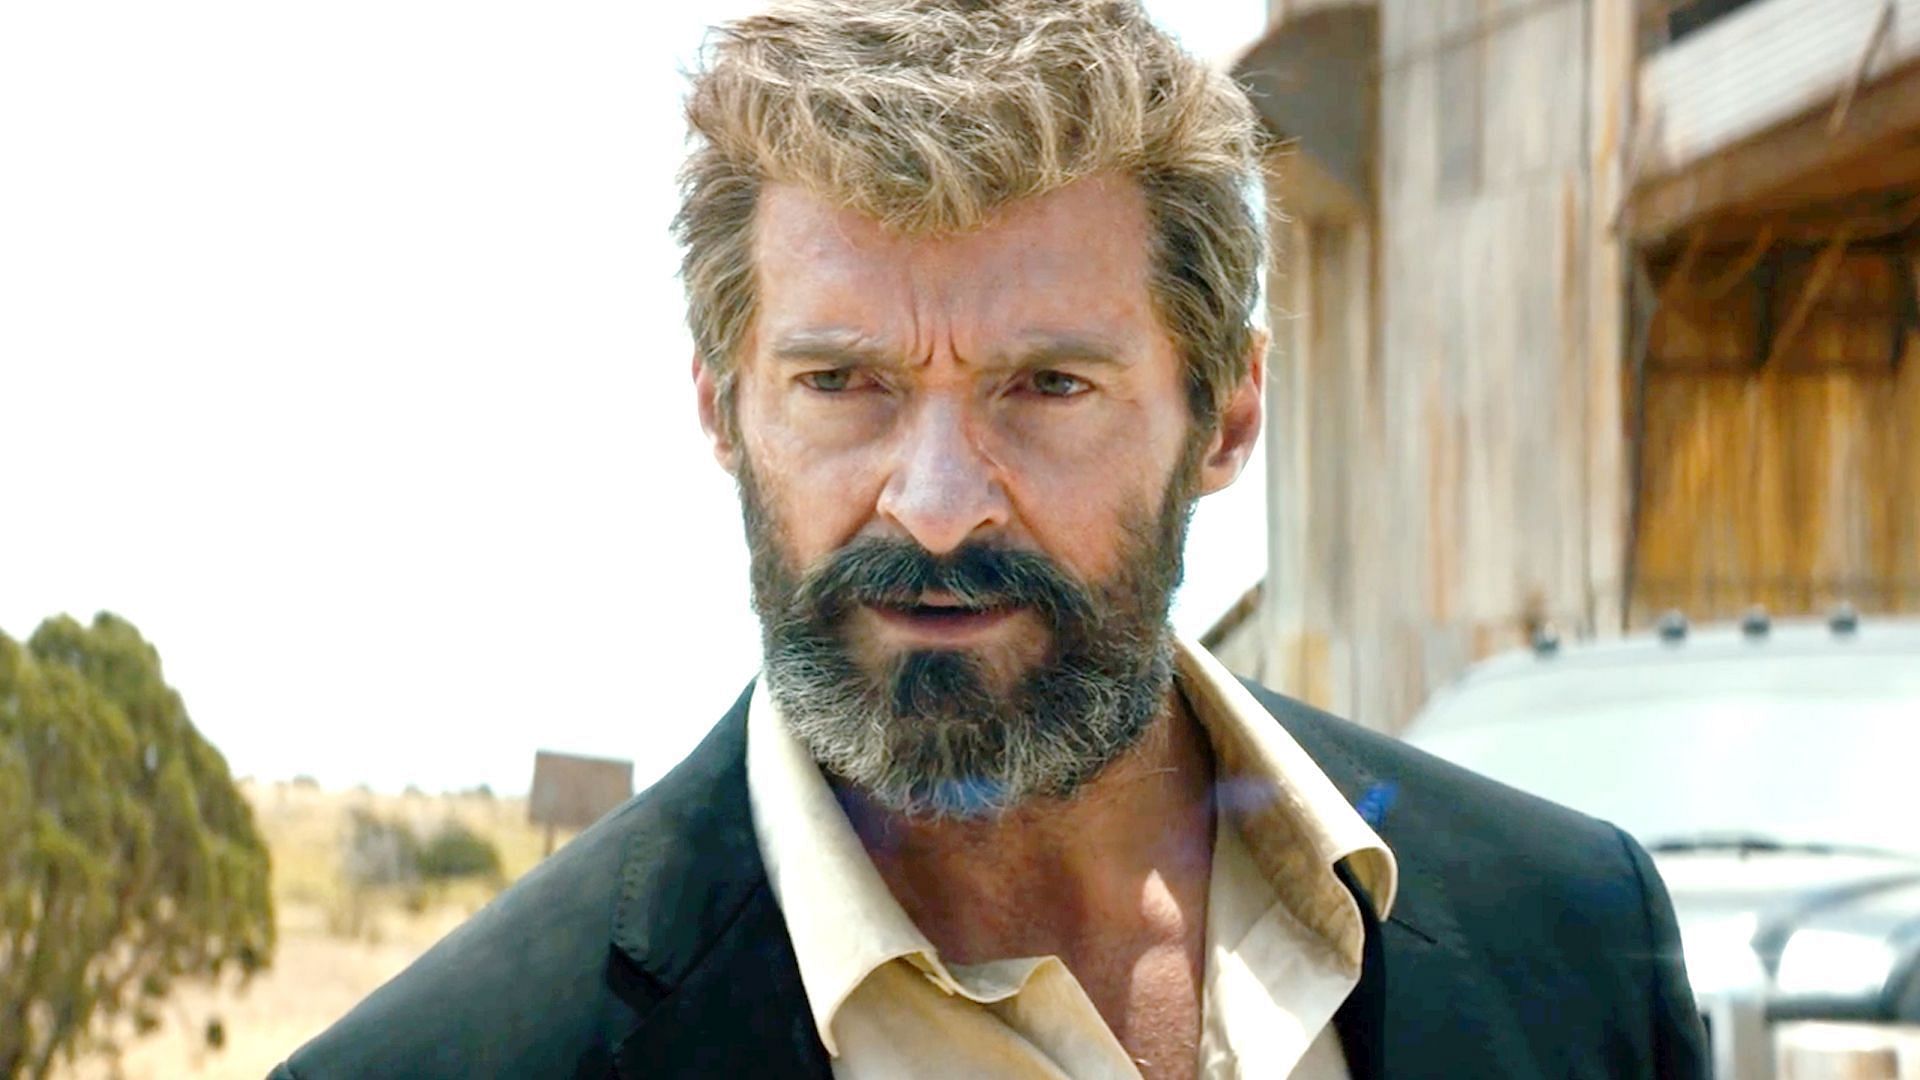 Hugh Jackman sported a new Wolverine beard before filming Deadpool 3. (Image via 20th Century Fox)